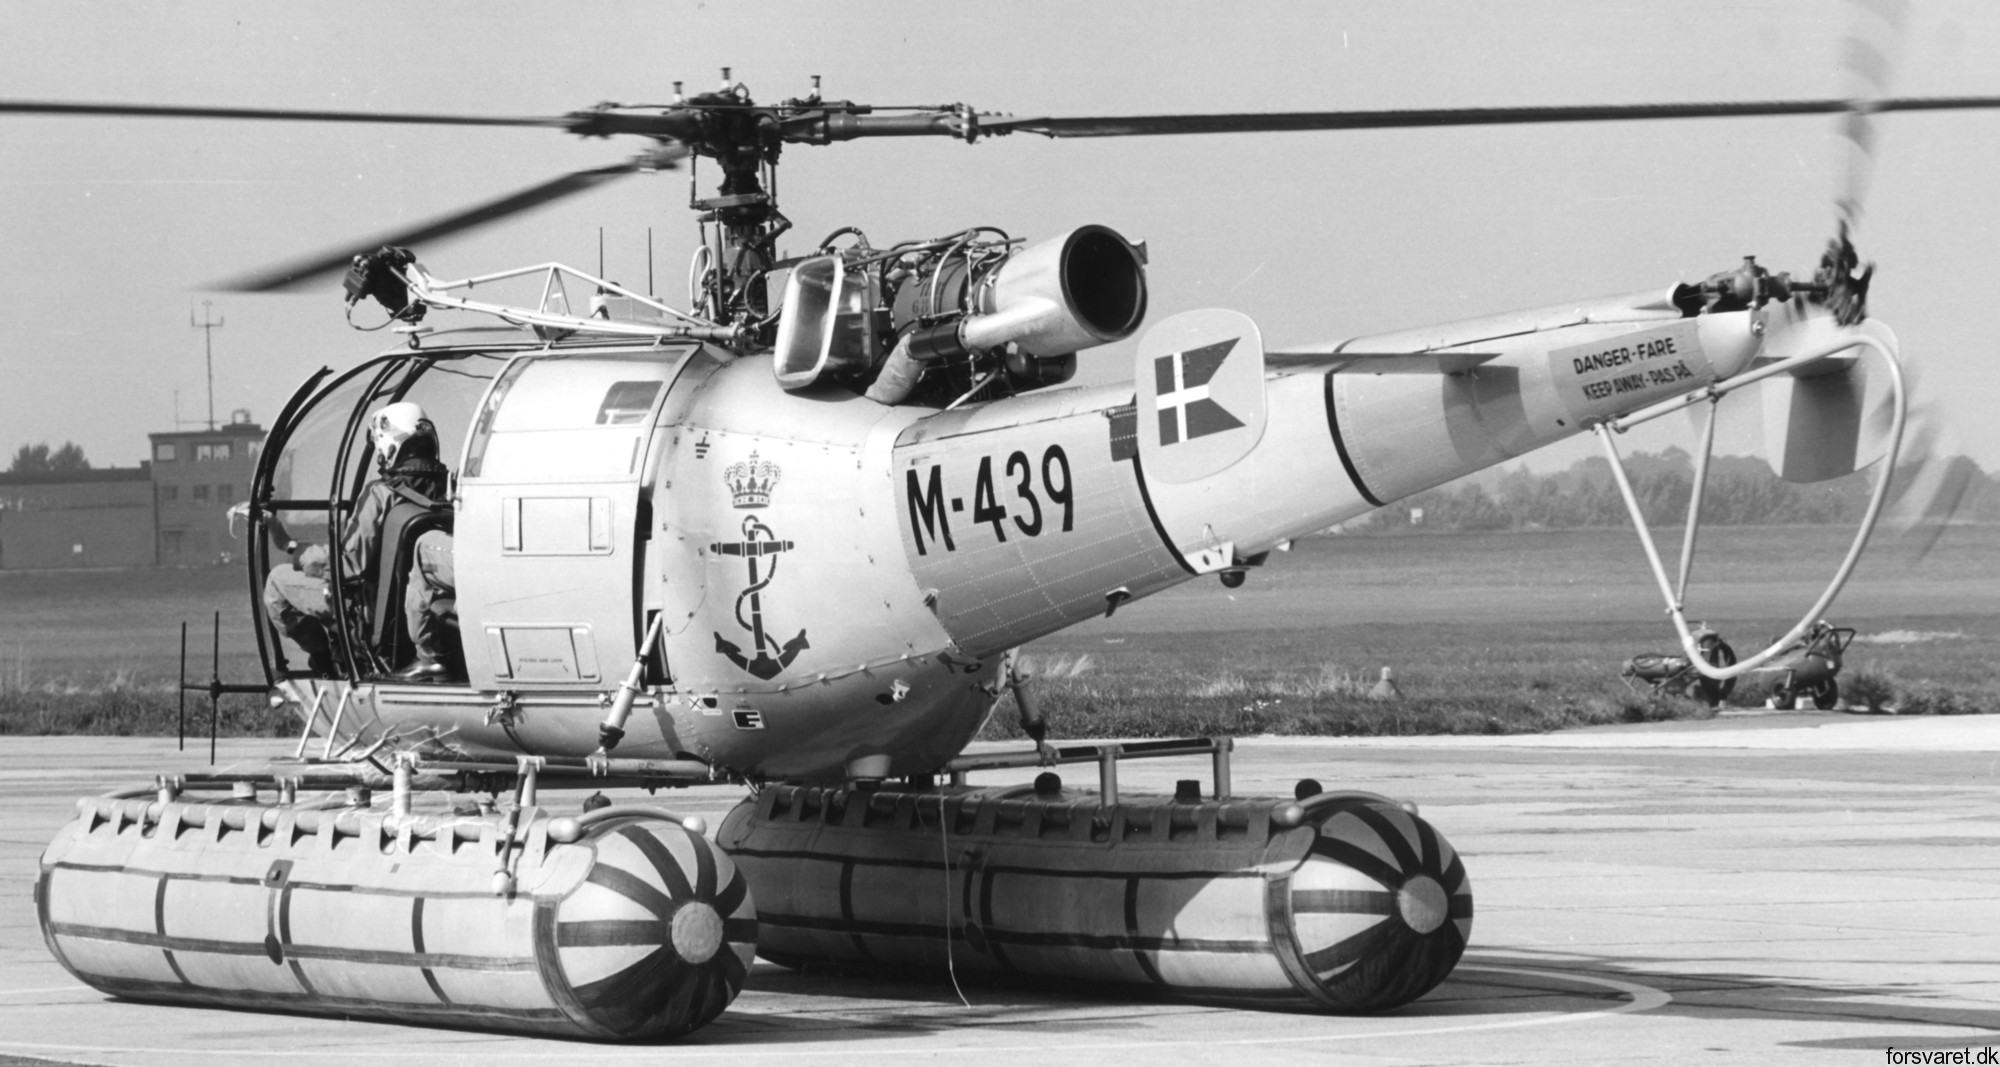 sa 316b alouette iii helicopter royal danish navy søværnet kongelige danske marine sud aviation m-439 10